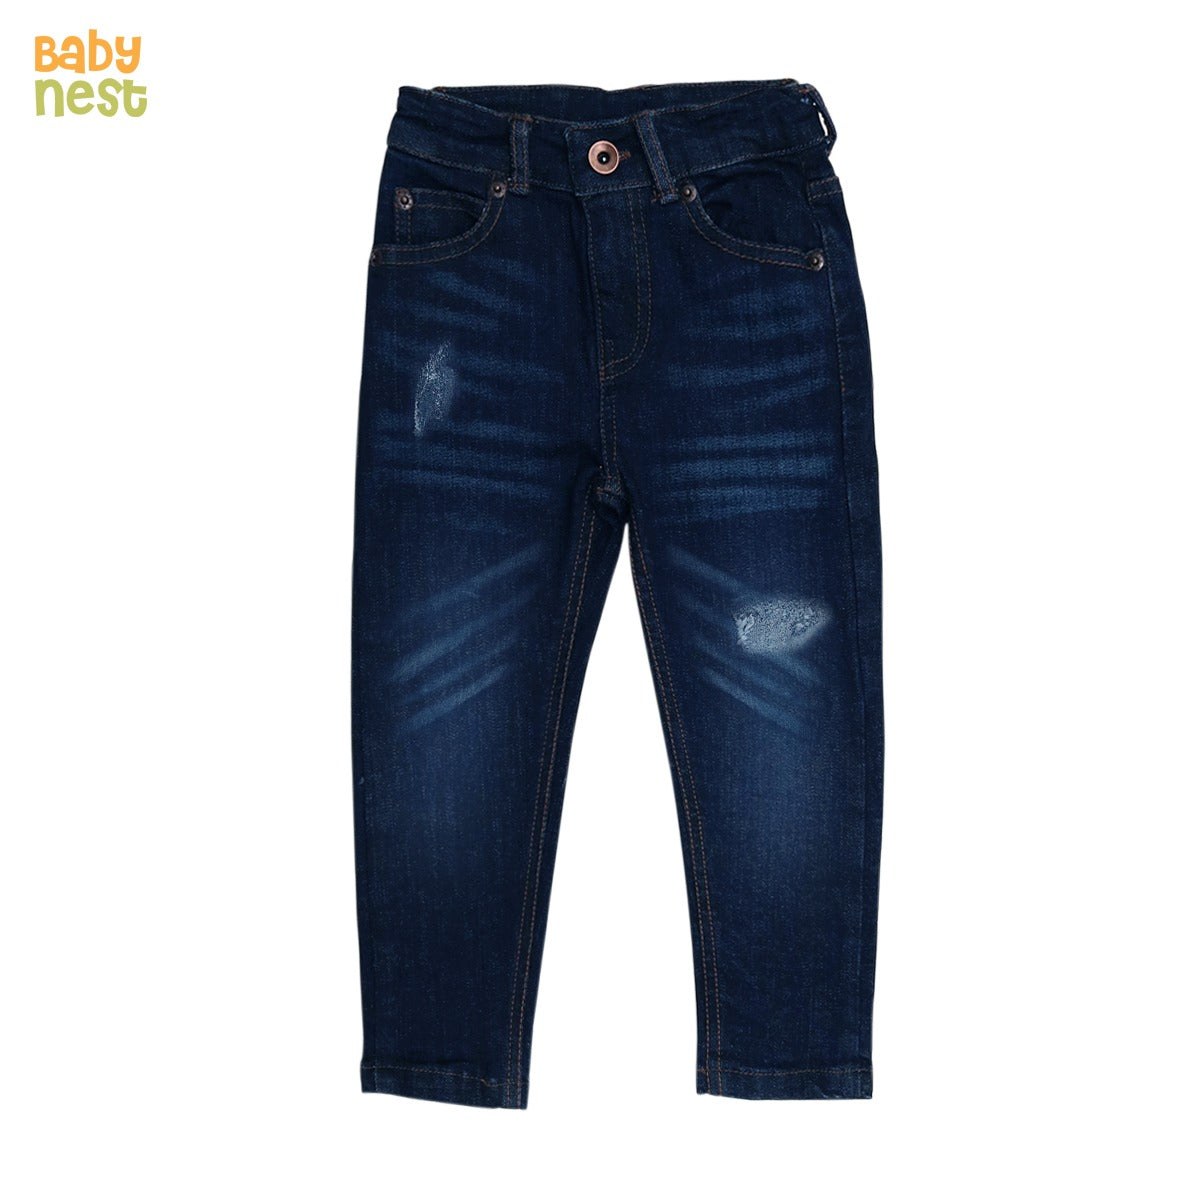 Denim Jeans for Kids - BNBDJ - 14